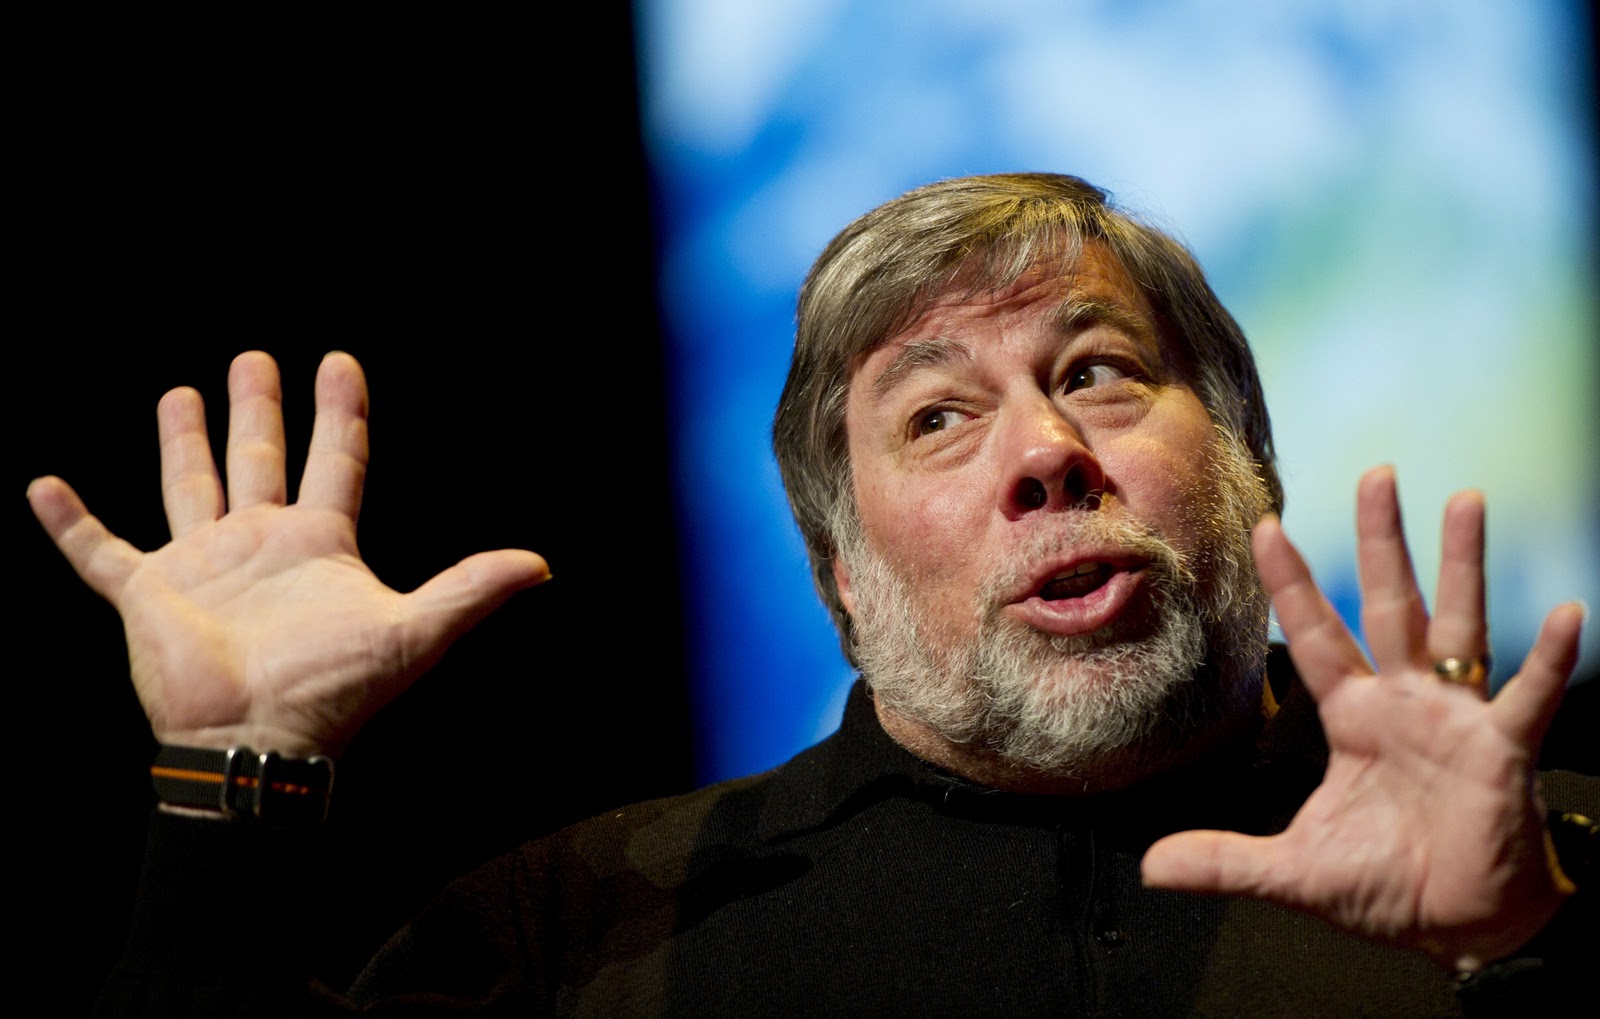 Steve Wozniak: “I really believed in myself when I began to design computers